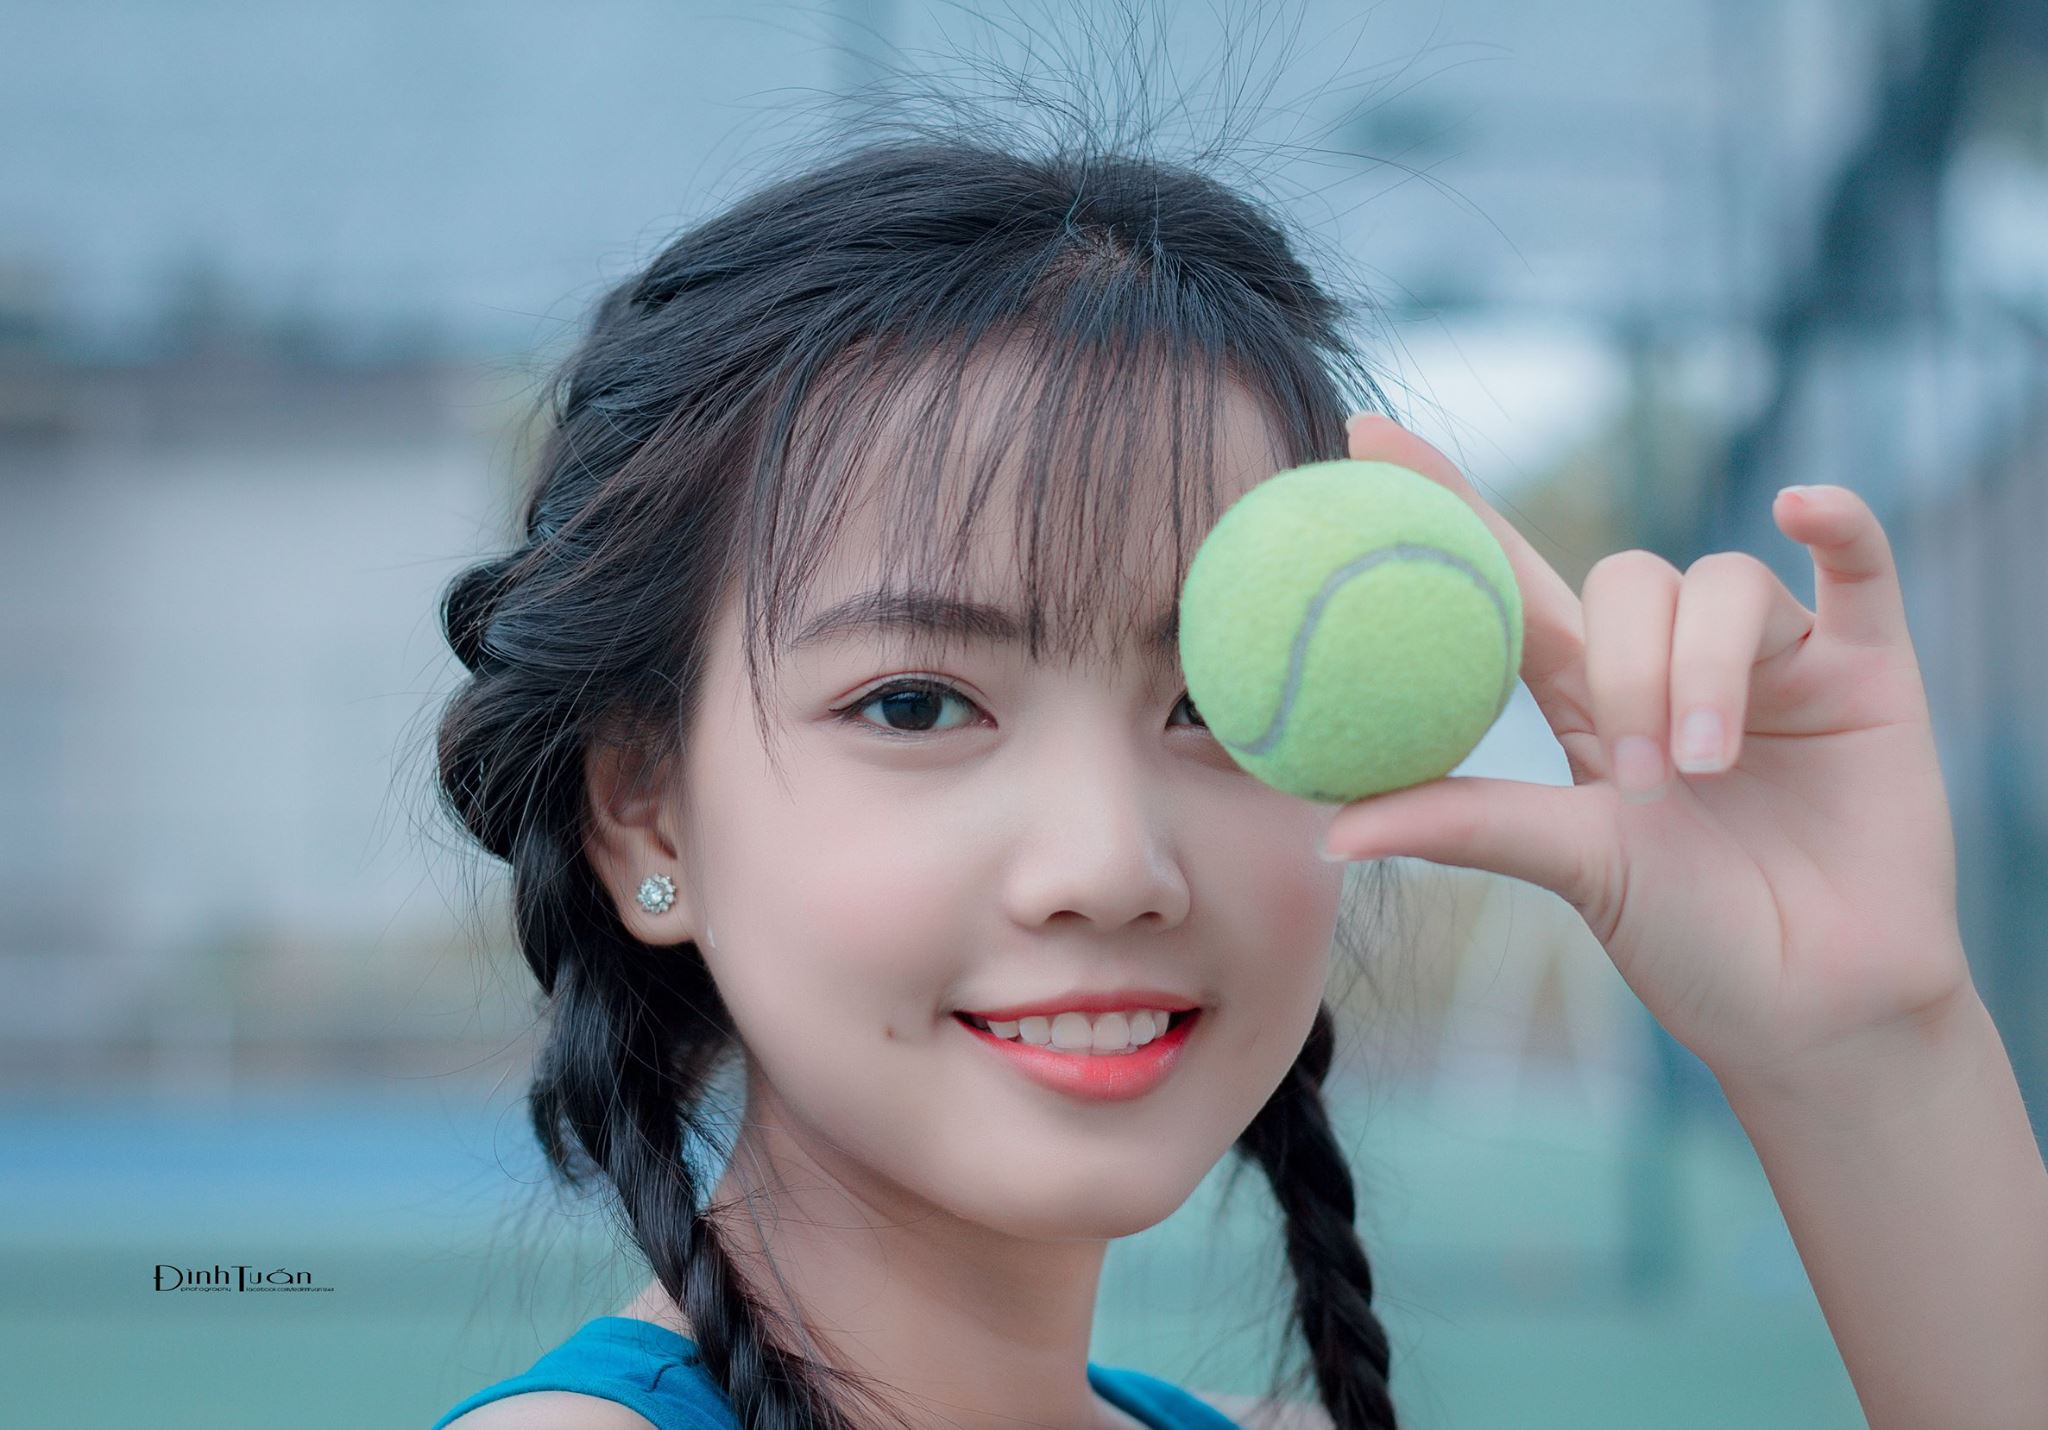 LDTPhotos | Le Dinh Tuan Tennis-2-11 Thư viện ảnh  